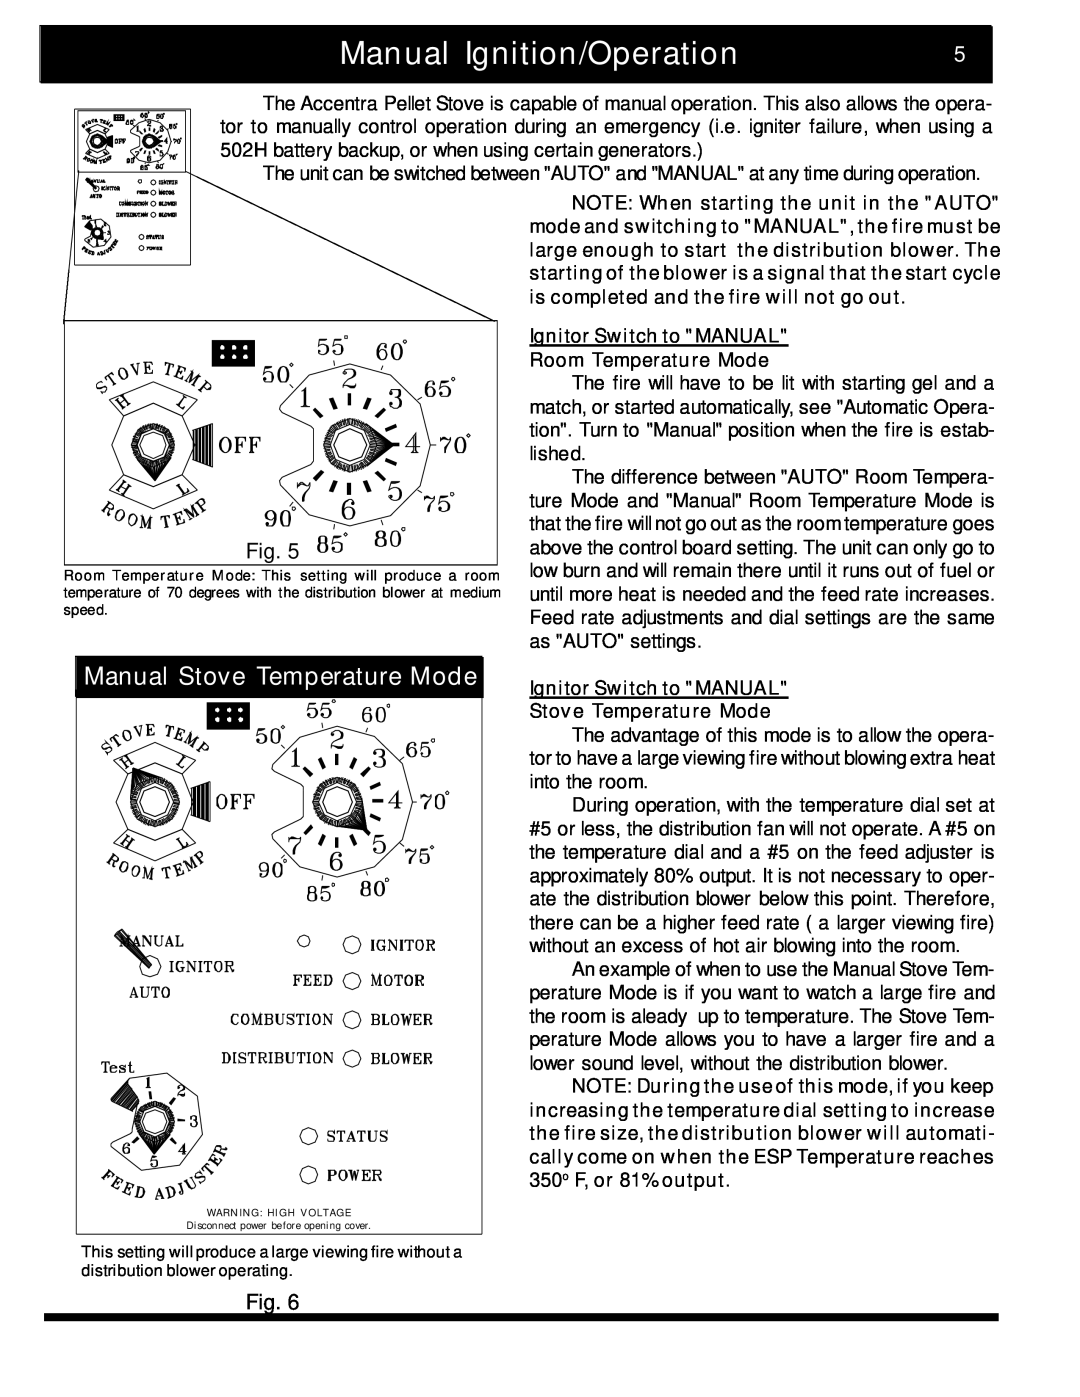 Harman Stove Company 2 manual Manual Ignition/Operation, Manual Stove Temperature Mode 